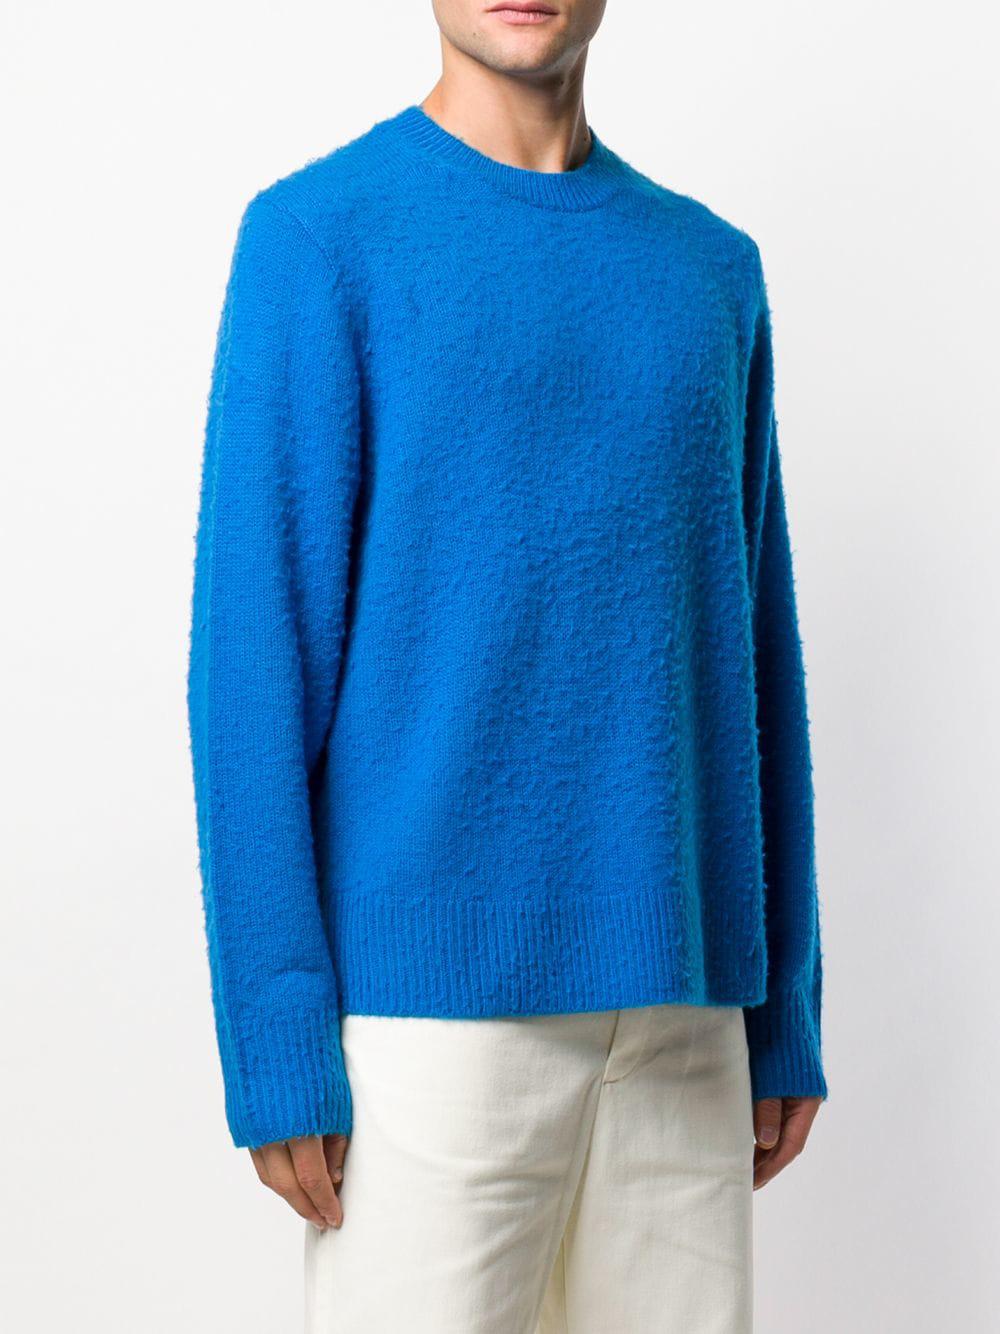 Lyst - Acne Studios Peele Crew Neck Sweater in Blue for Men